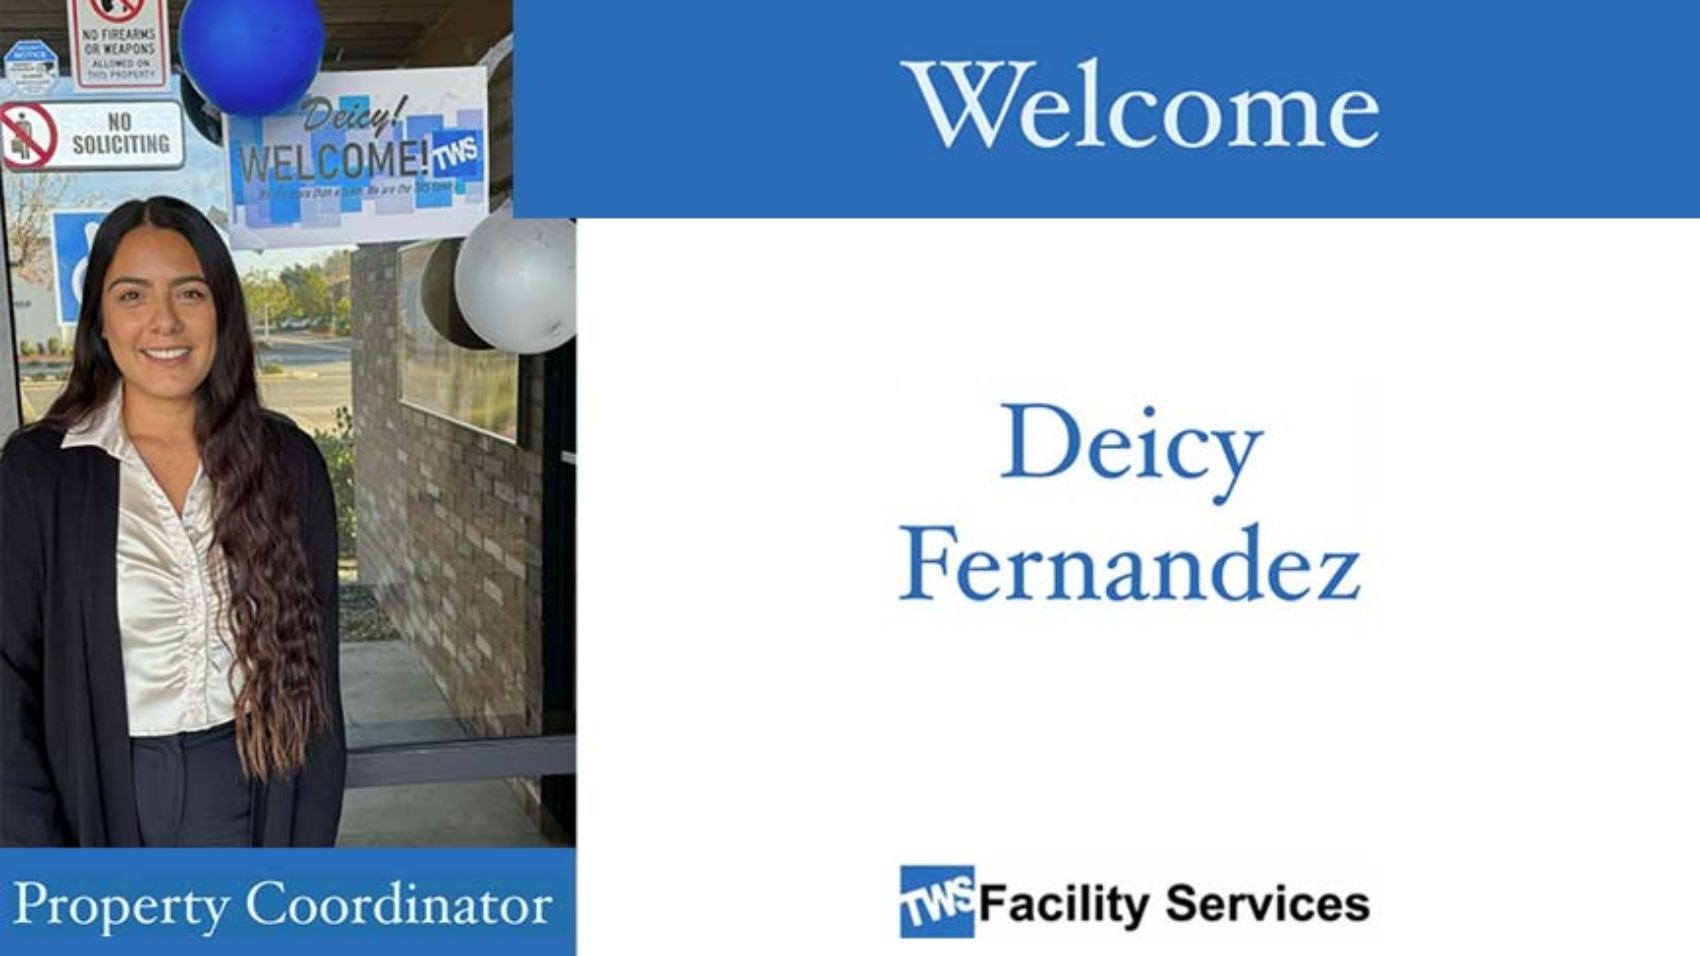 TWS-Welcome-Deicy-Fernandez